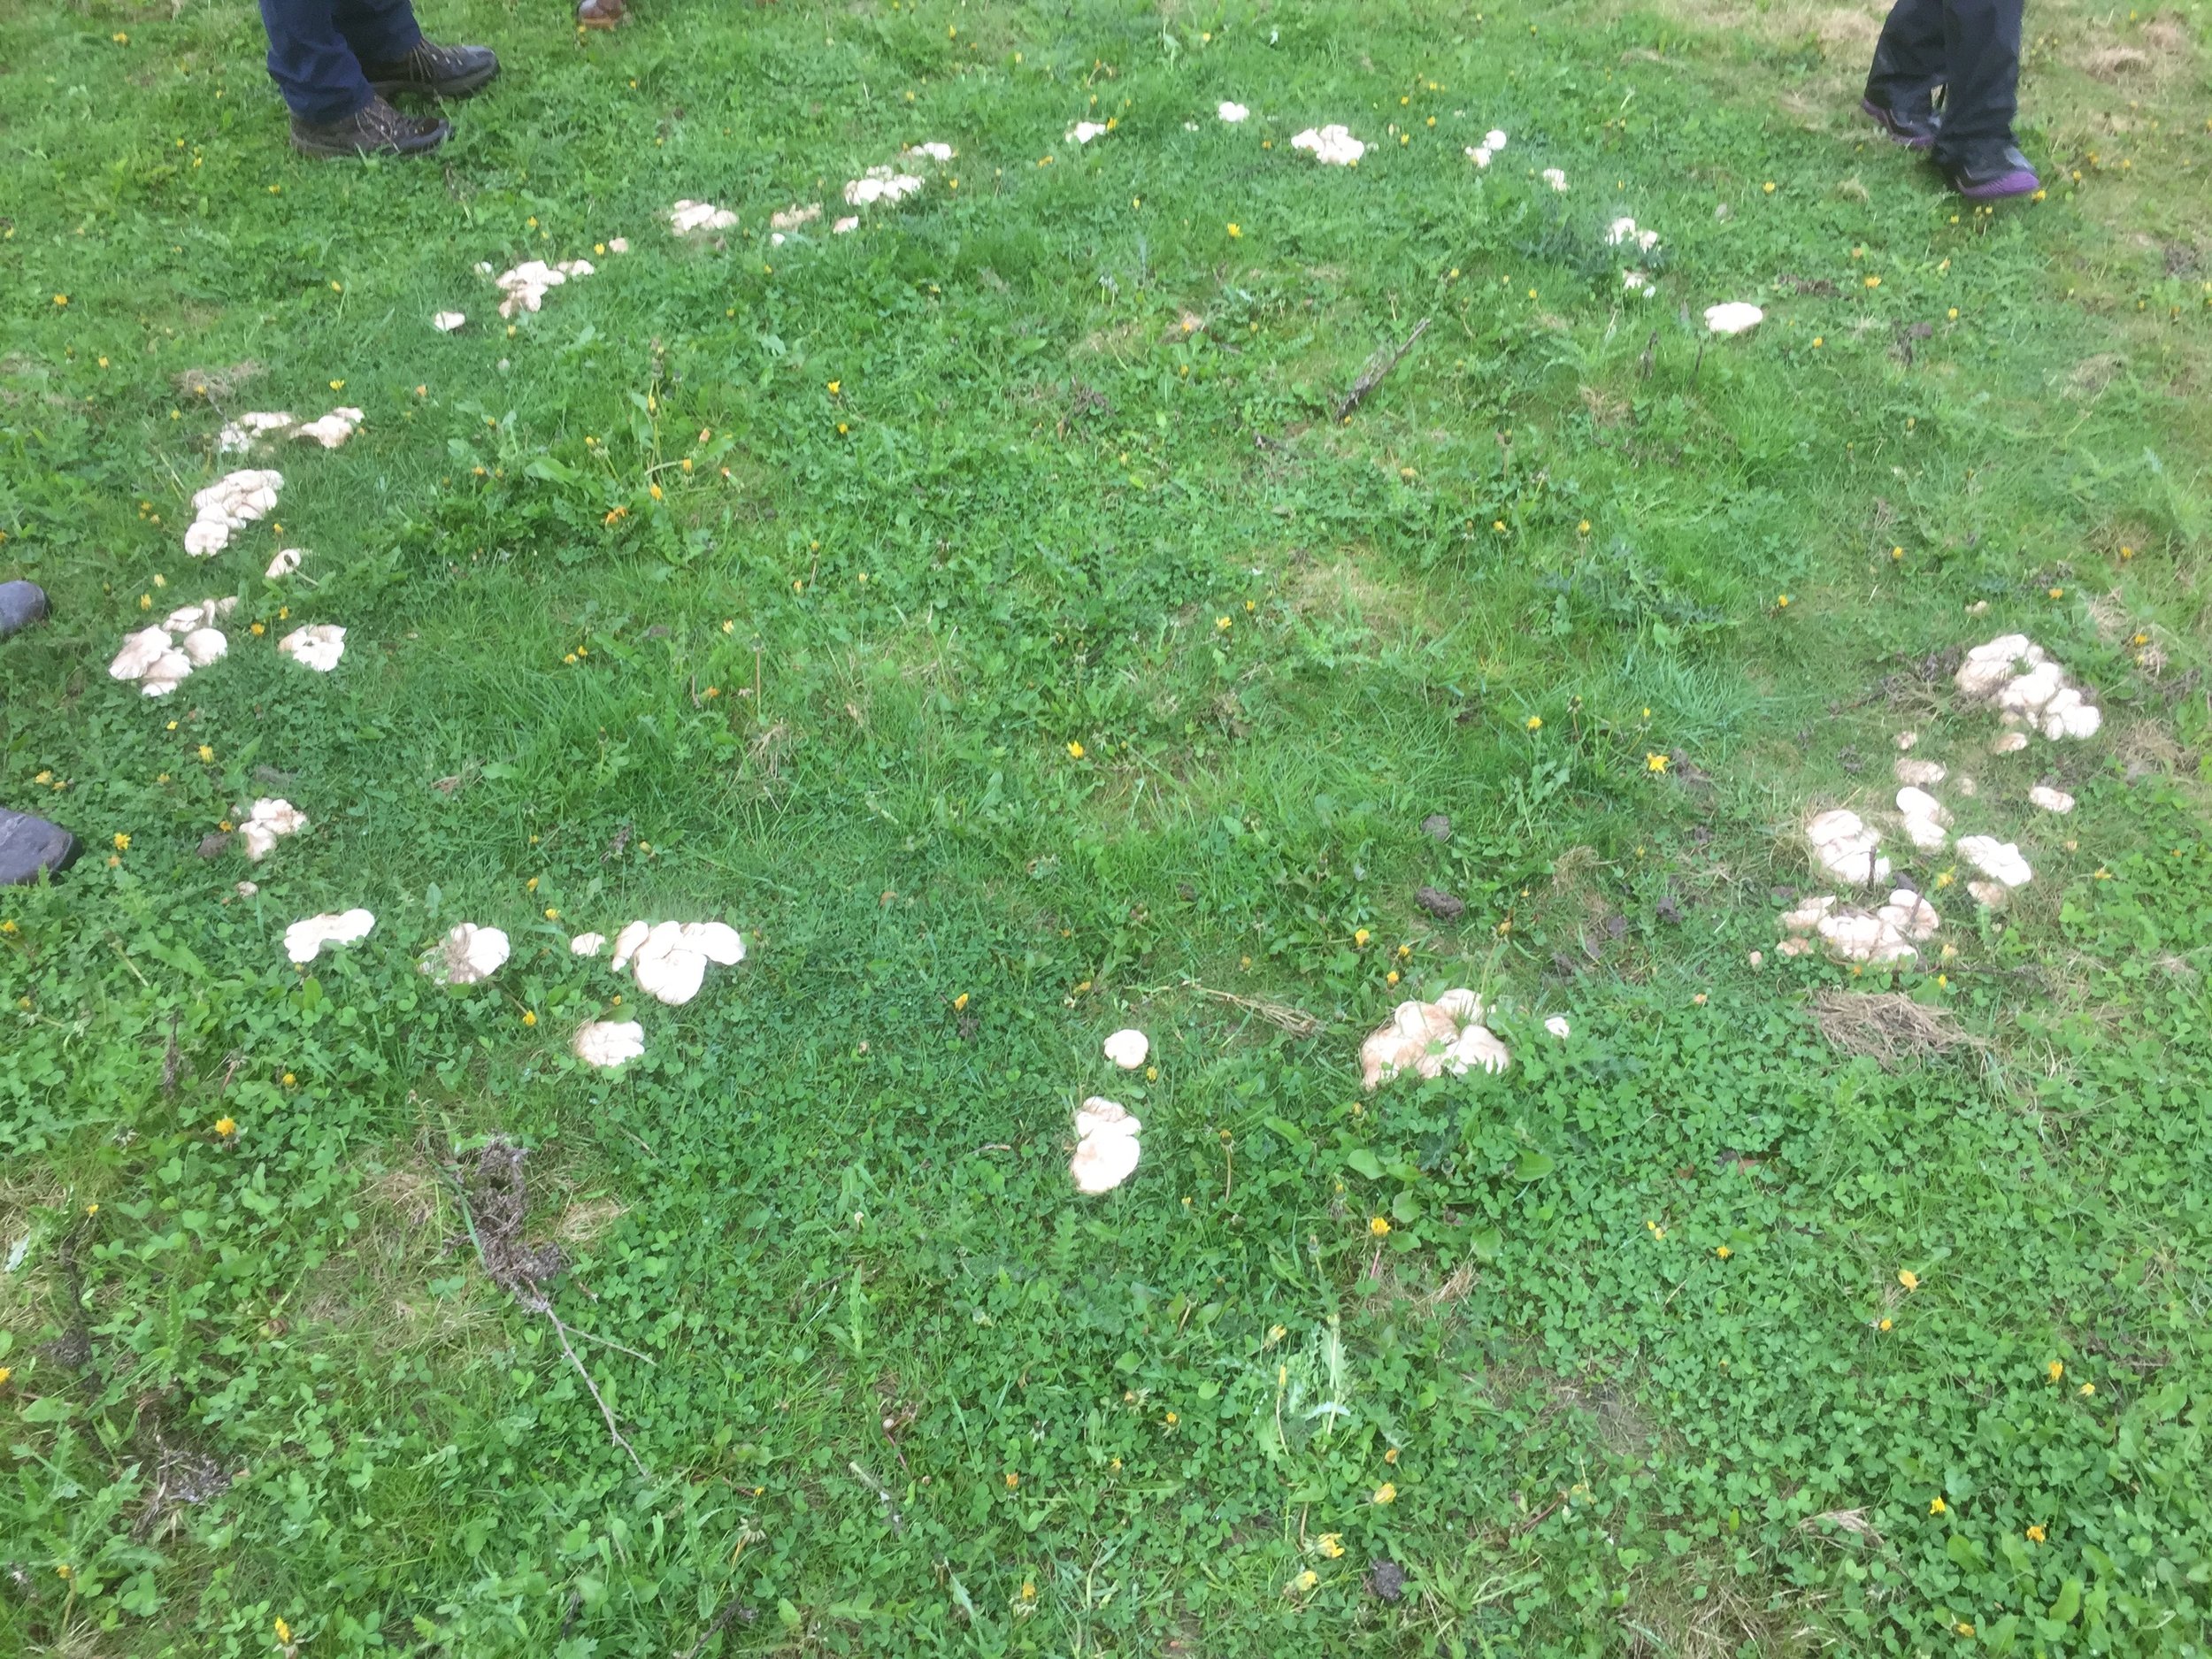 A "fairy ring" of fungi